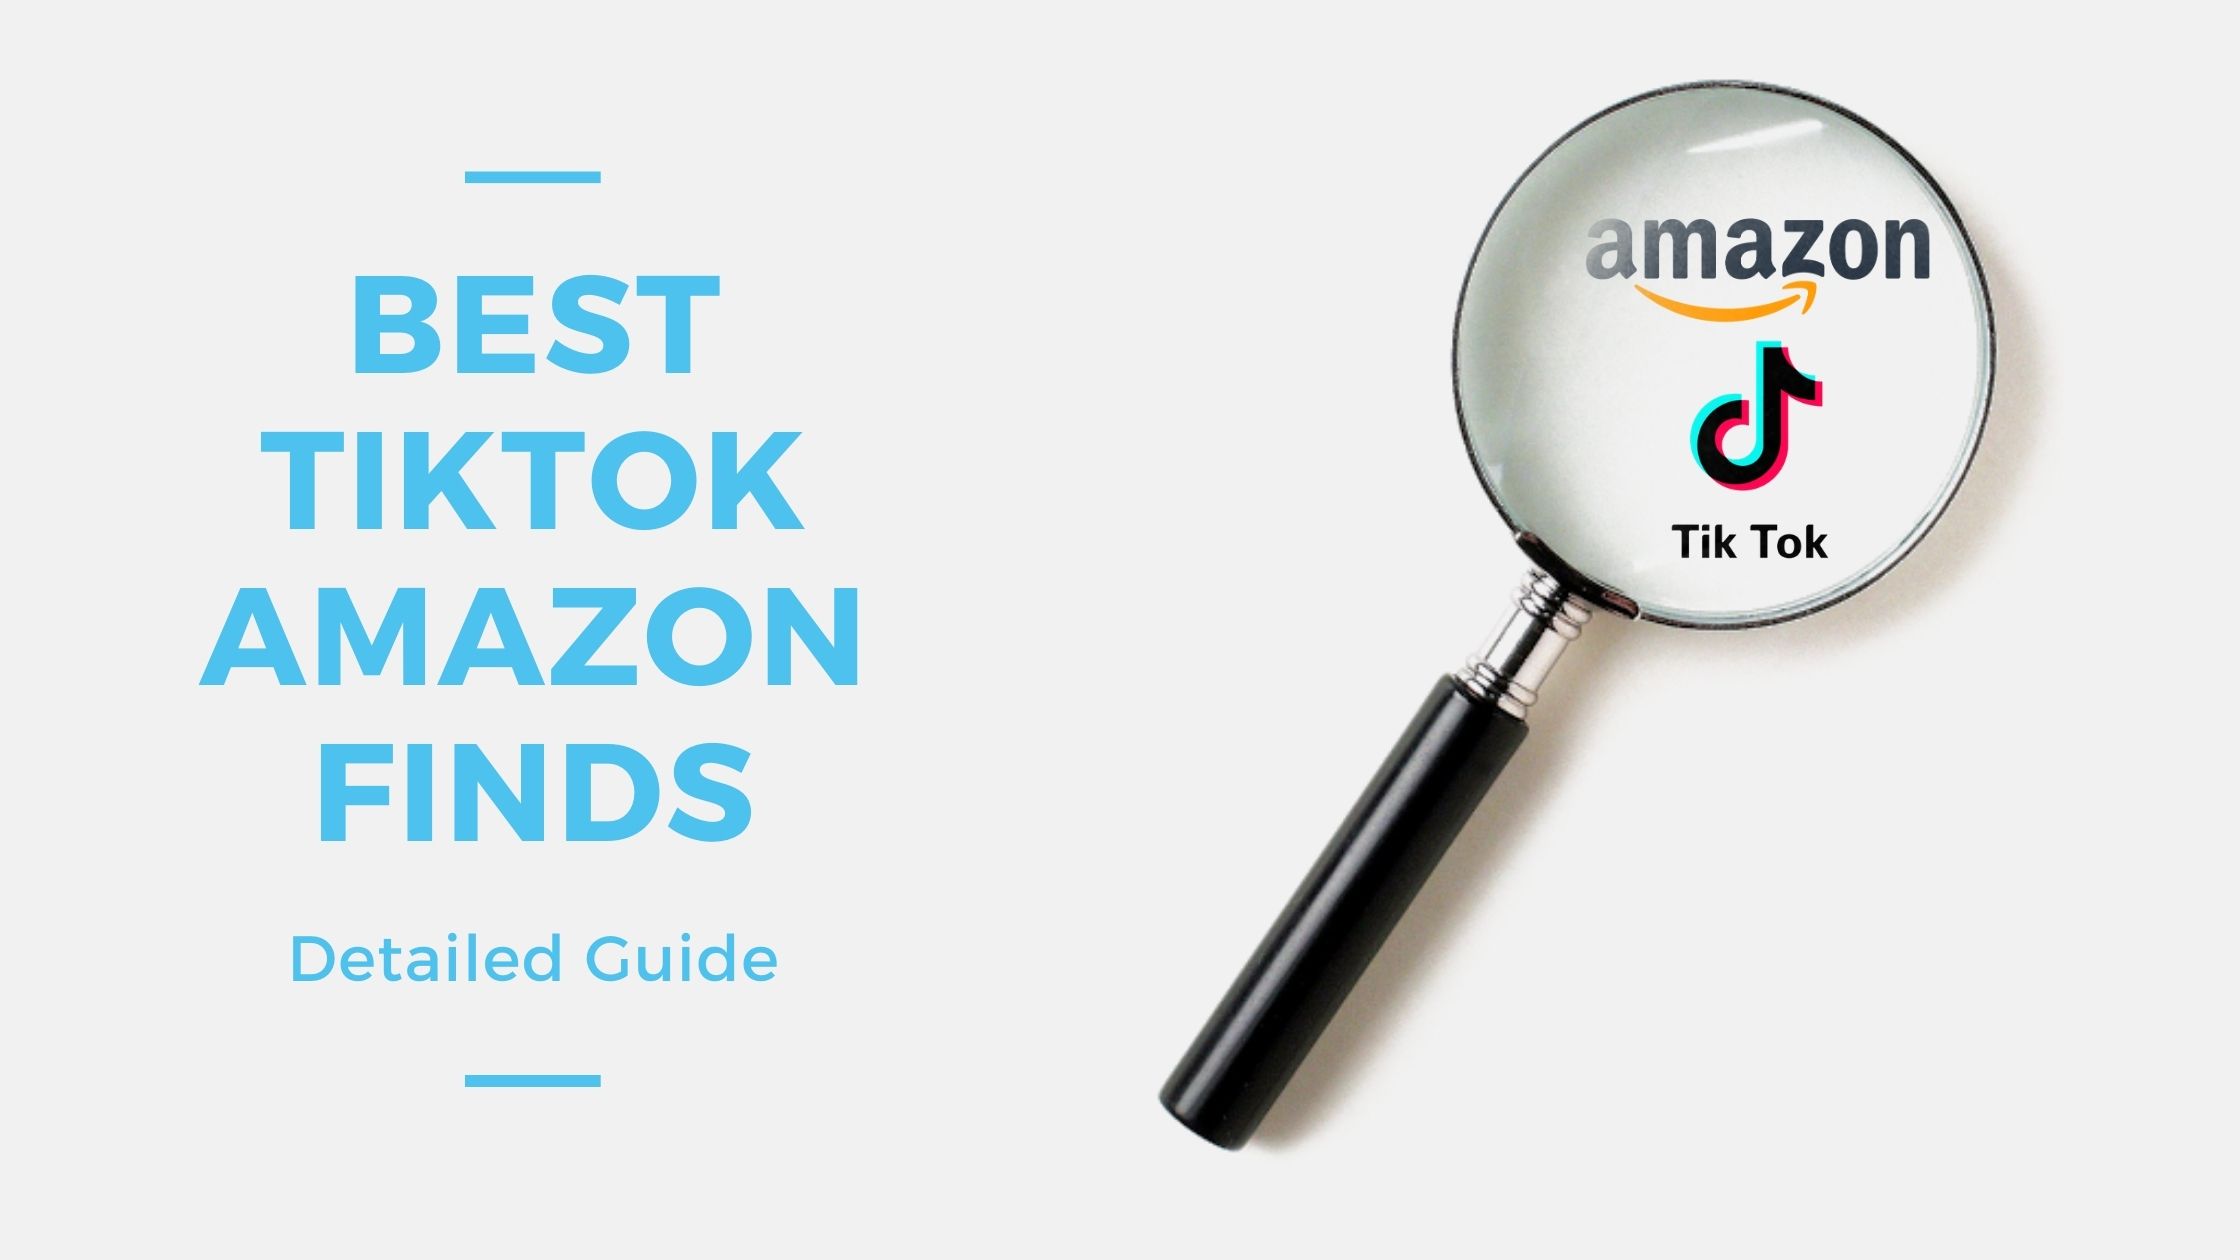 10 Best Tiktok Amazon finds